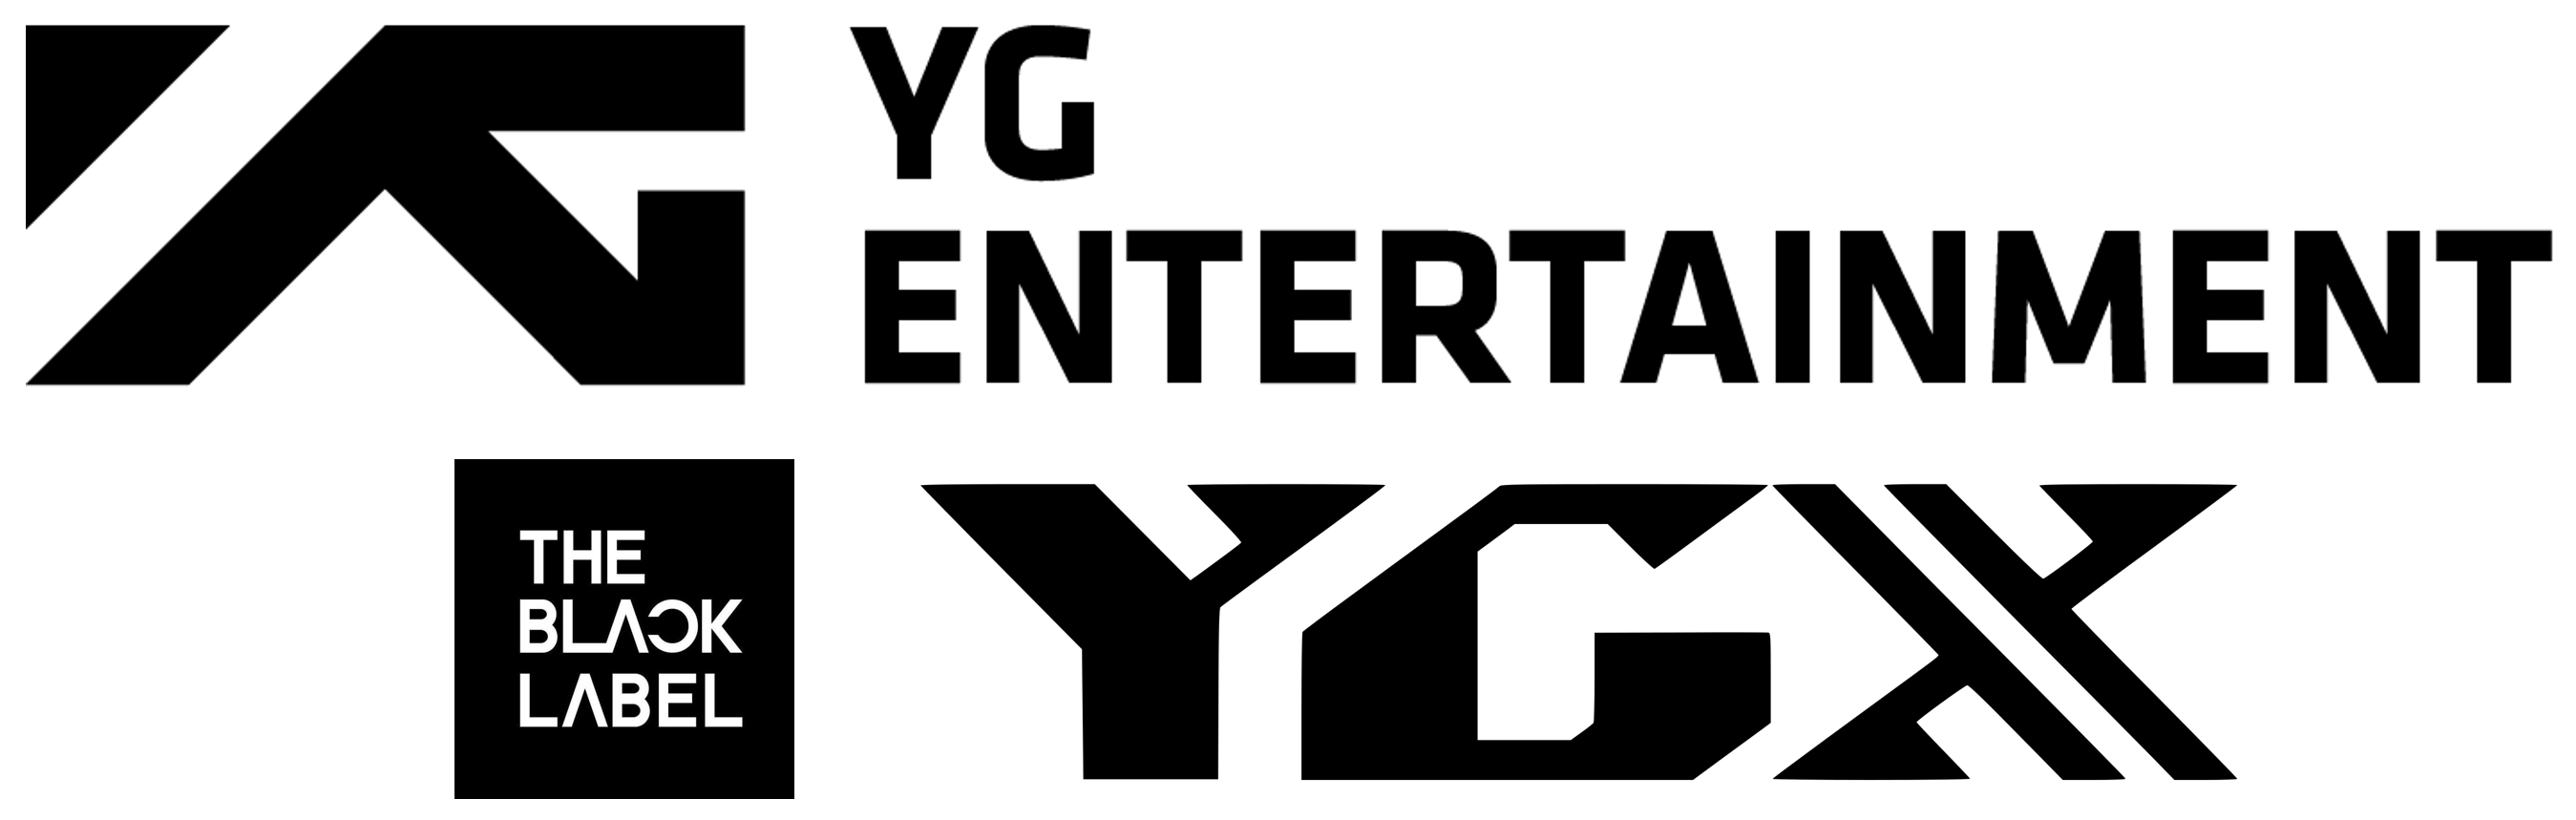 YG-Ent로고와-산하-레이블-로고